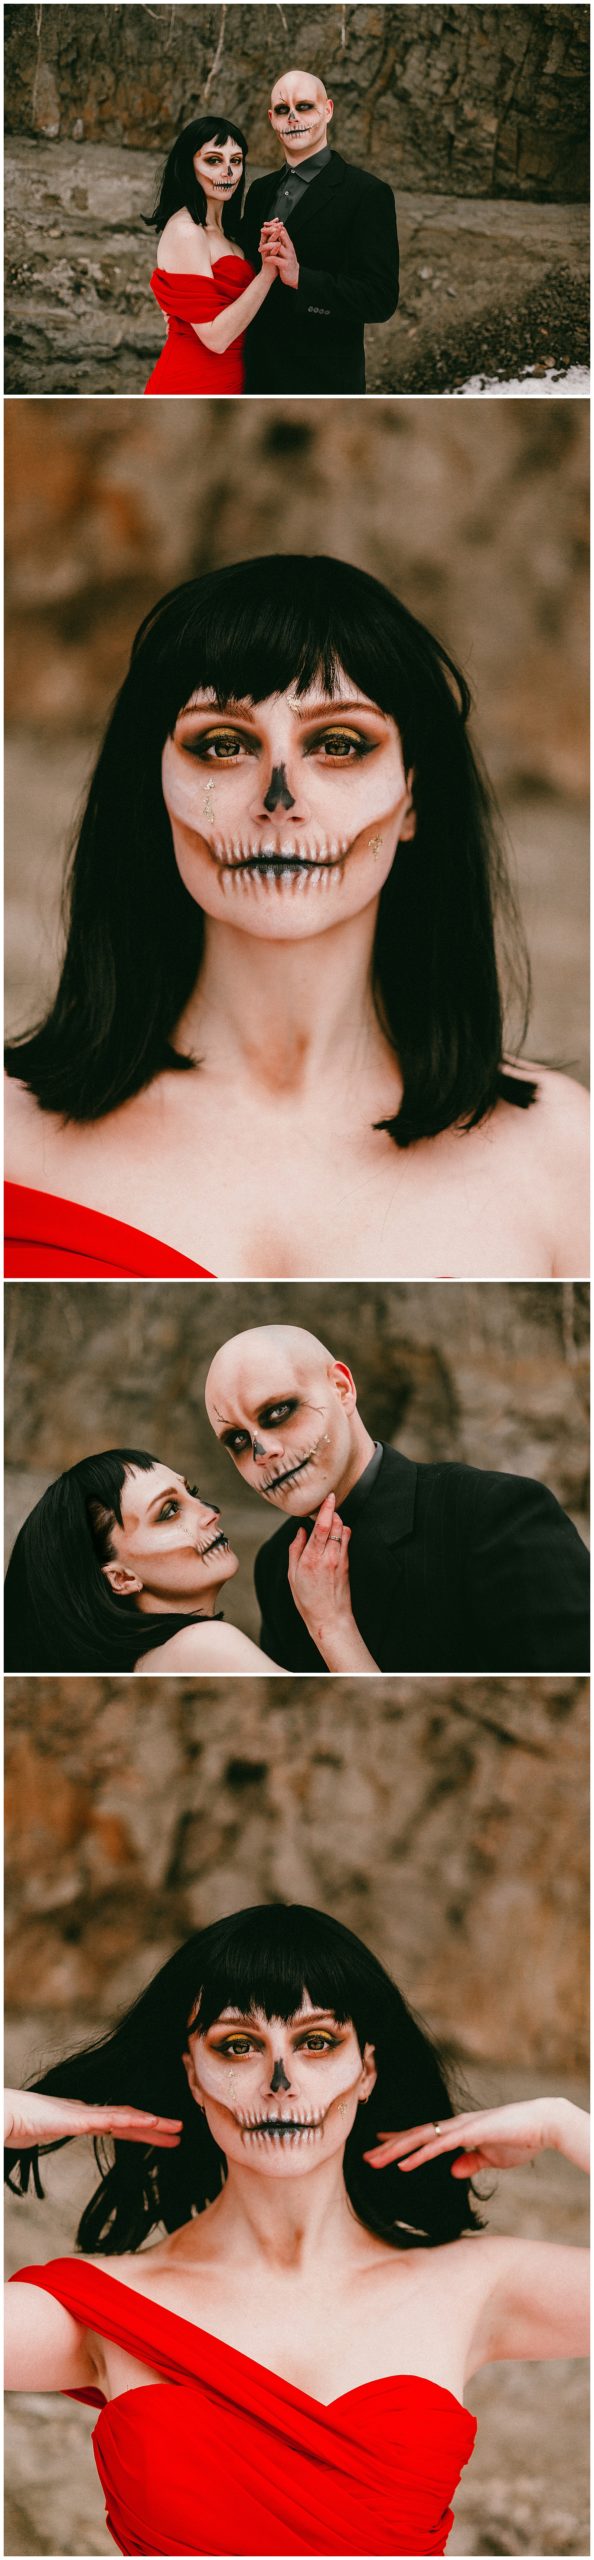 Spooky Valentine's Day Photoshoot